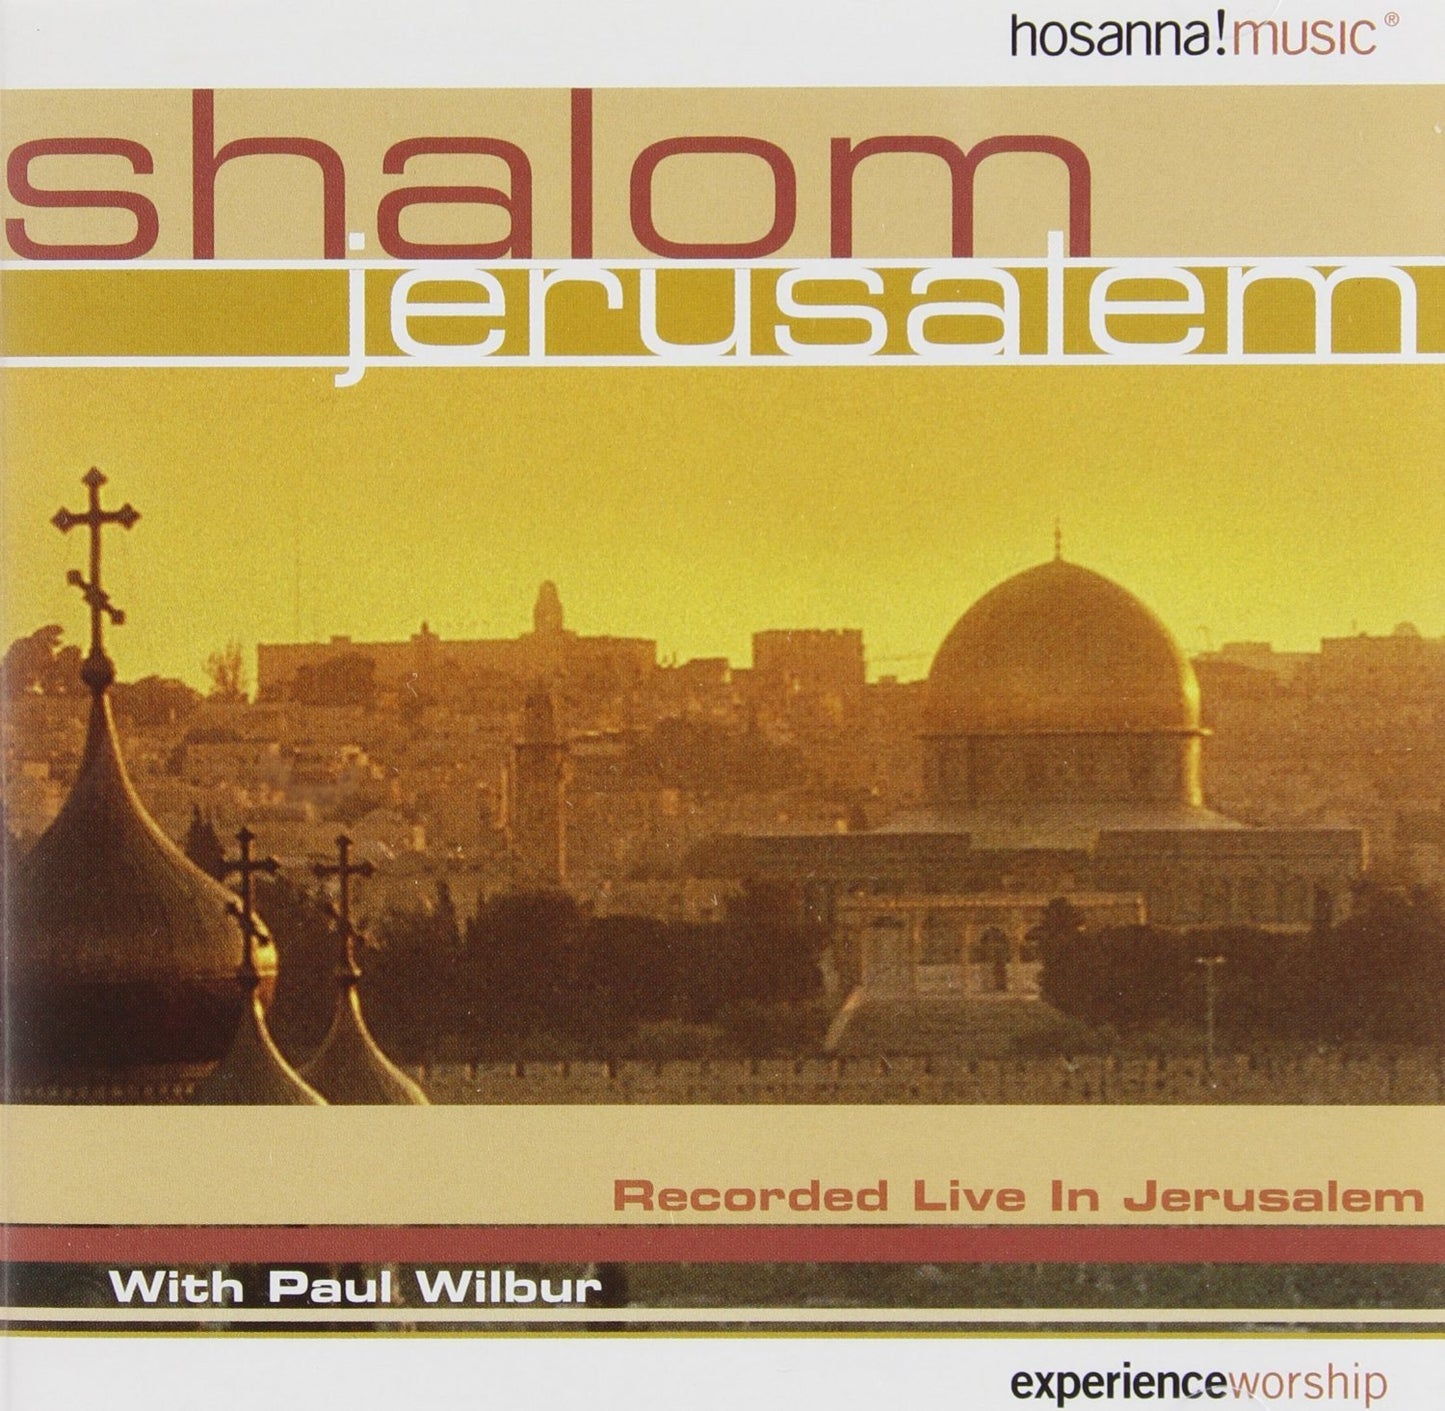 Shalom Jerusalem - Rock of Israel 